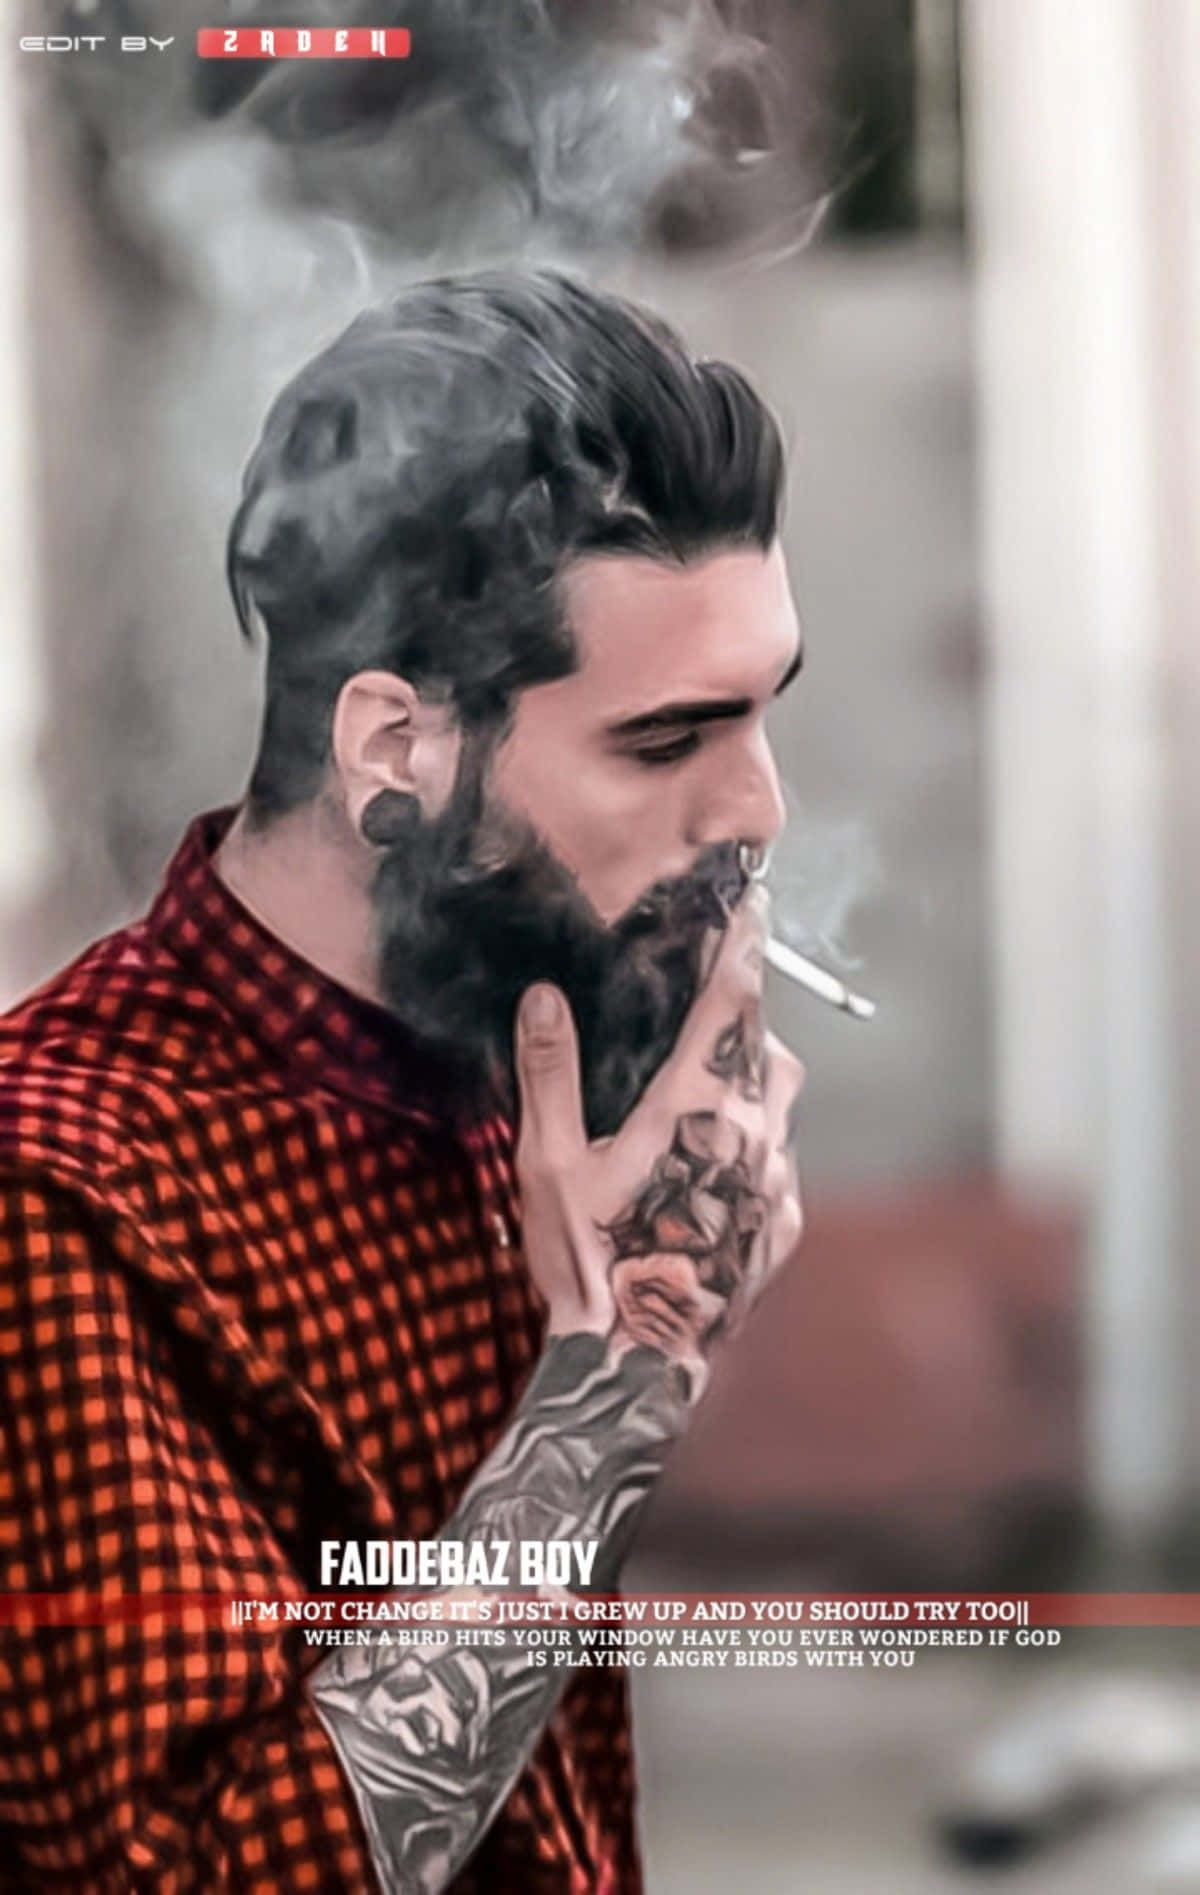 A Man With A Beard Smoking A Cigarette